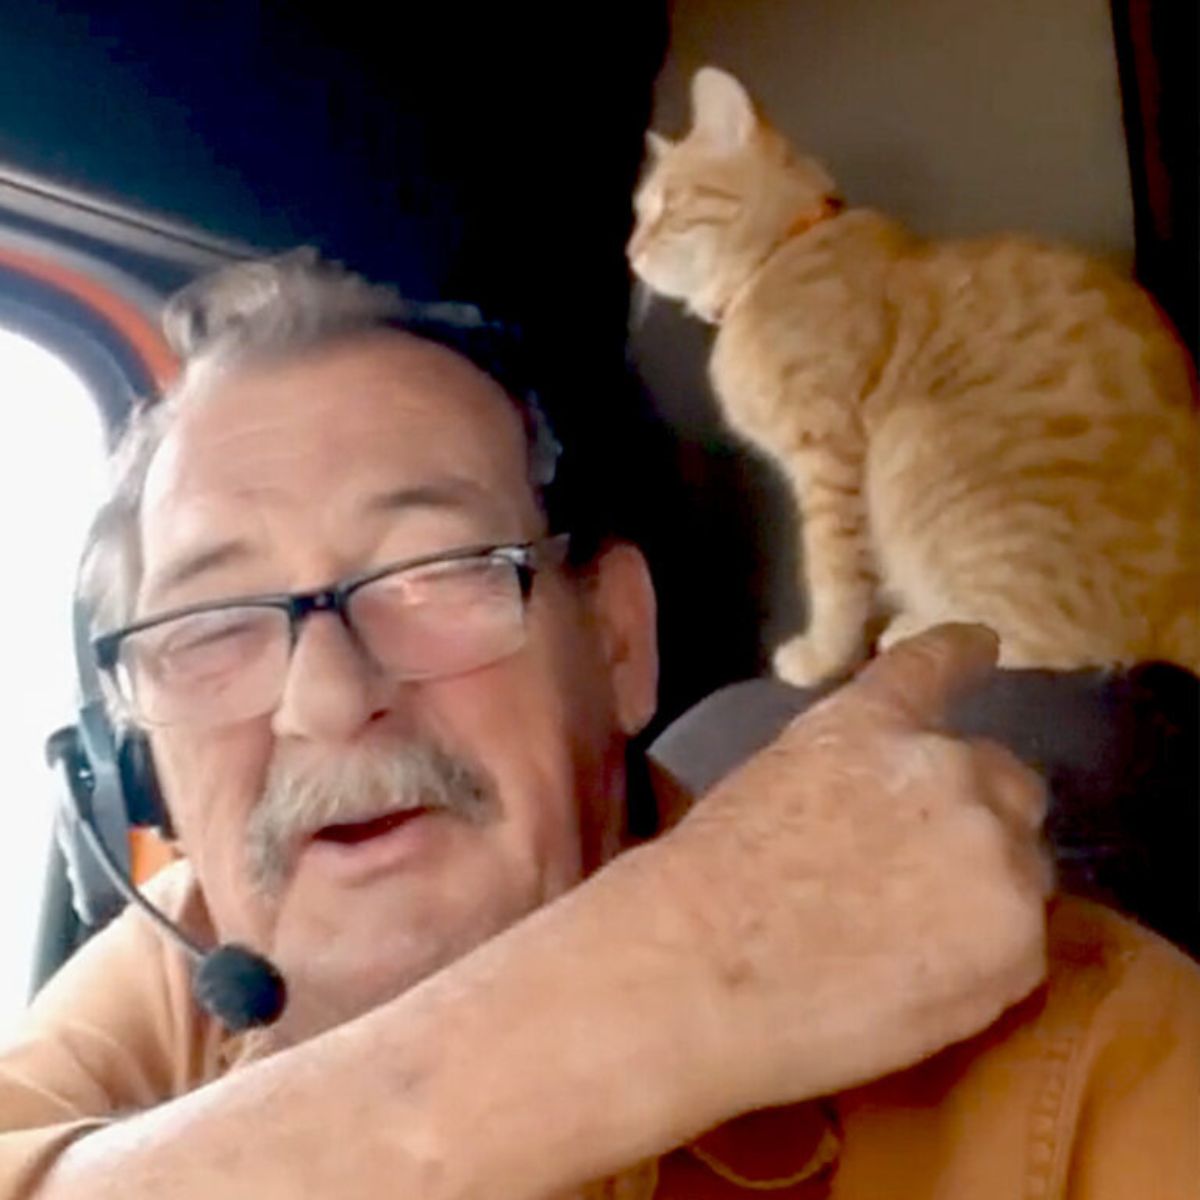 old guy trucker and kitten